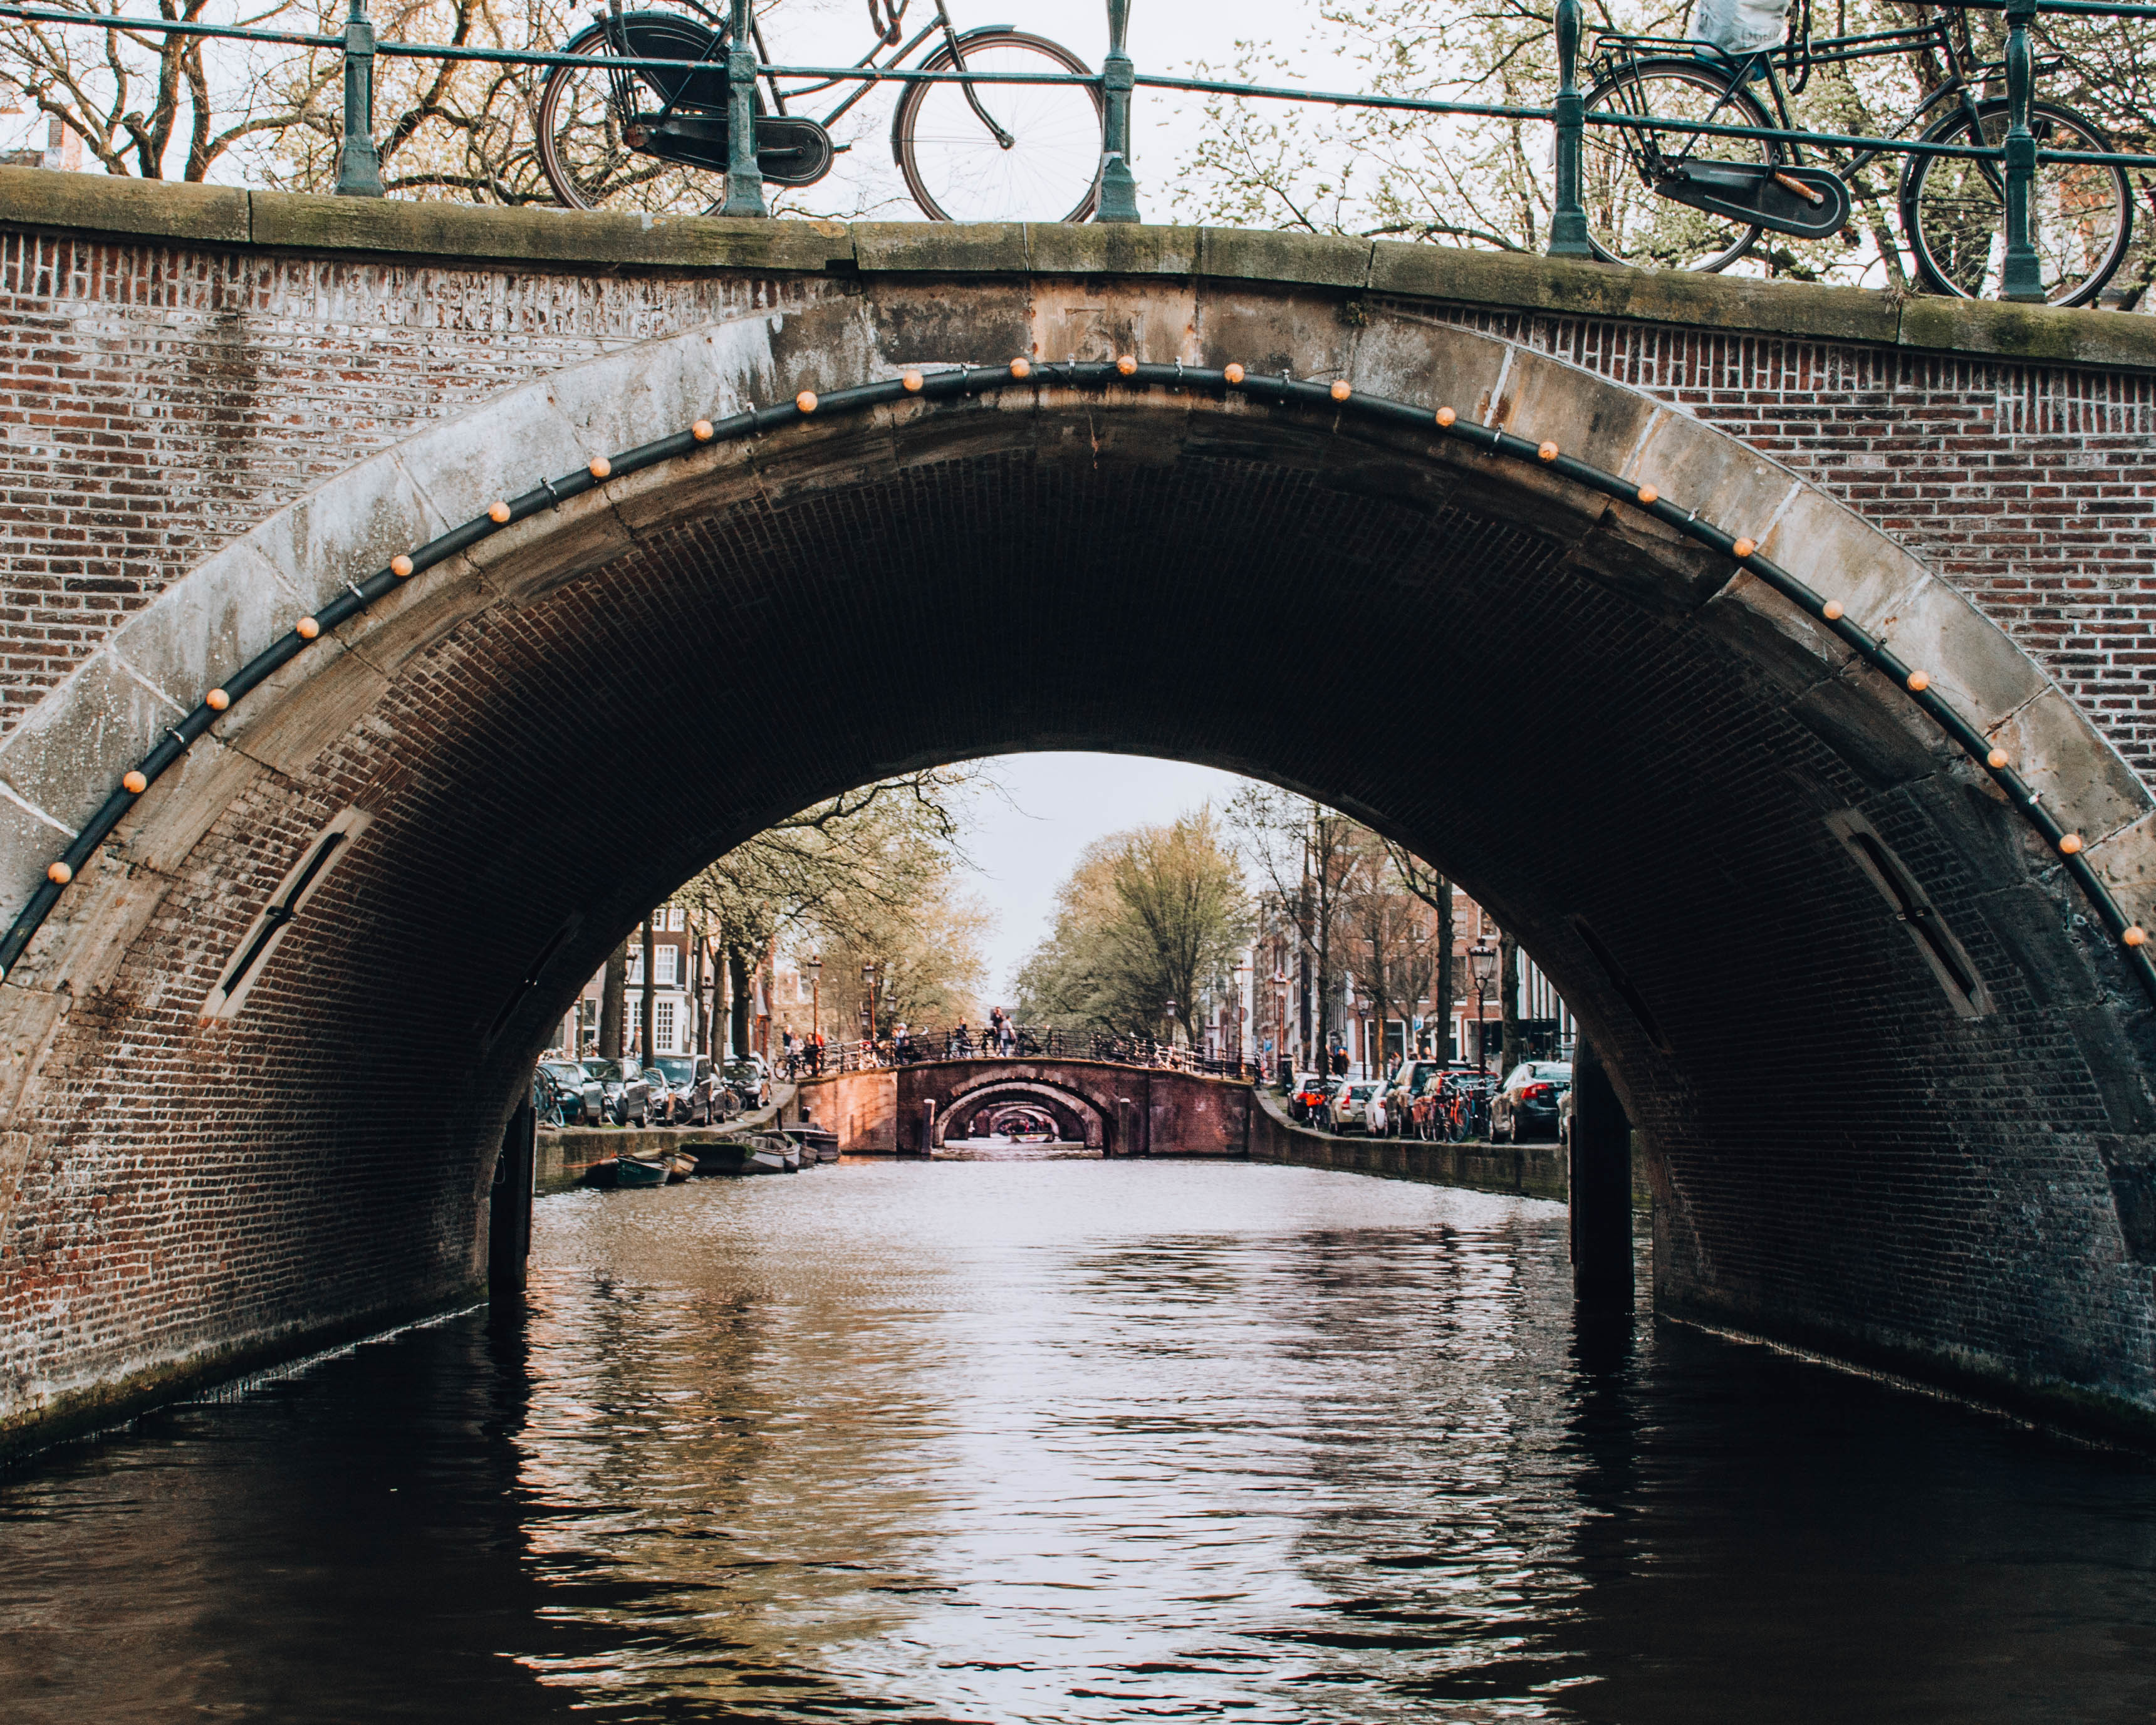 canali di amsterdam